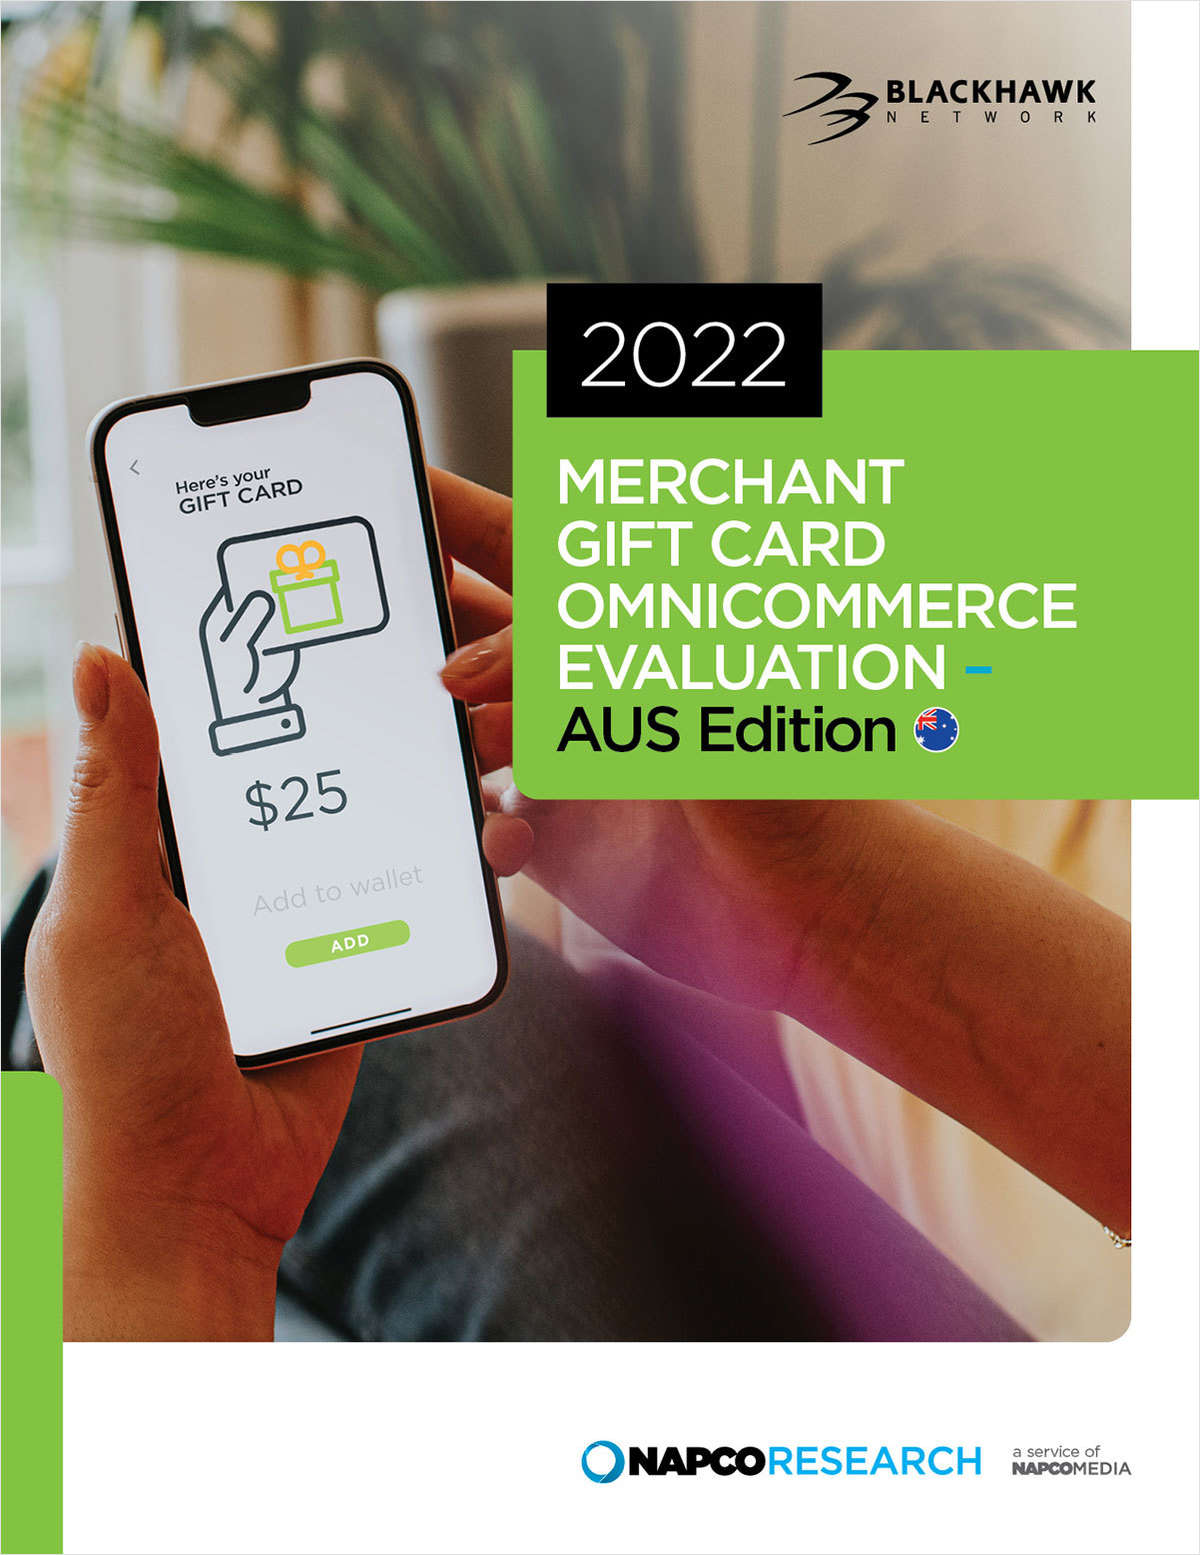 2022 Merchant Gift Card Omnicommerce Evaluation - AUS Edition